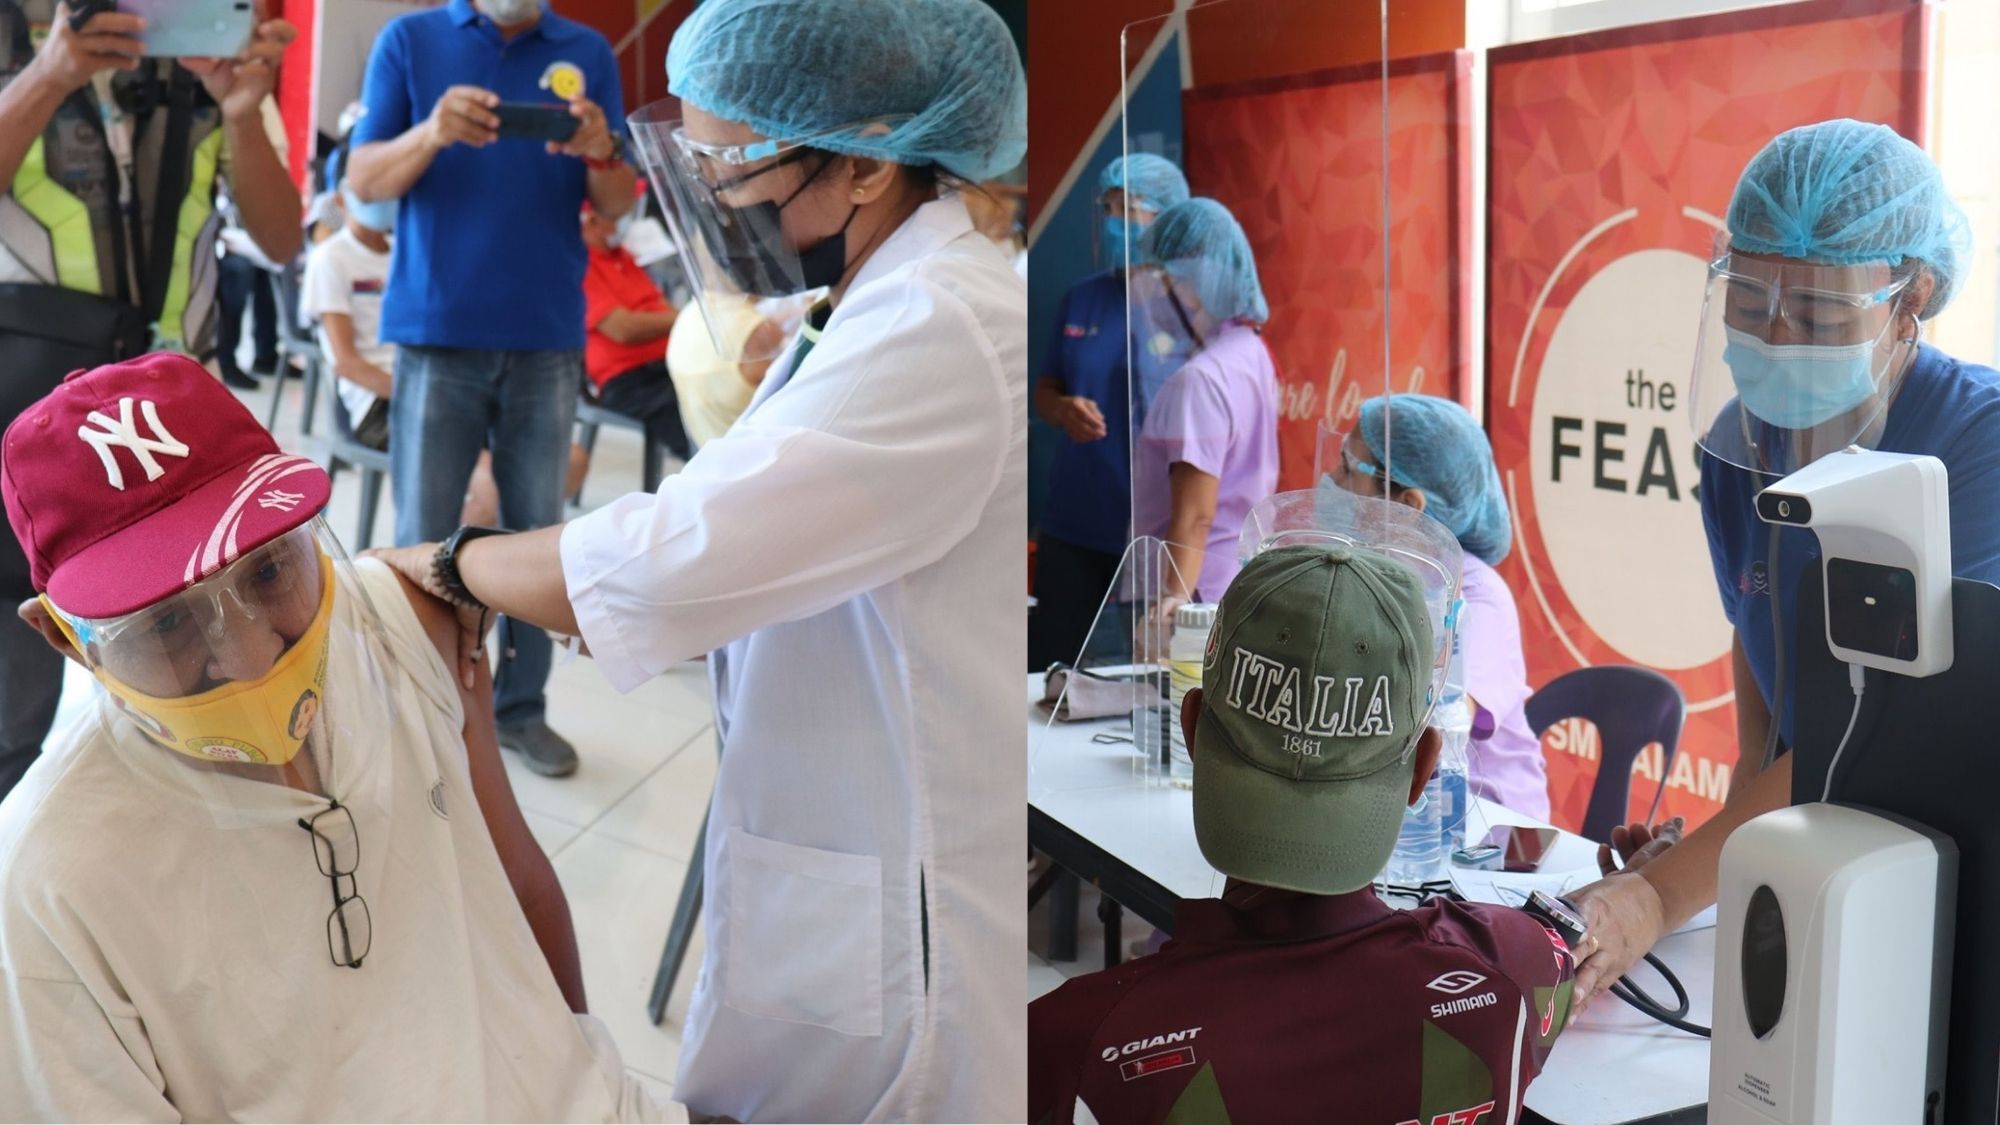  Senior citizens’ vaccination starts in Laguna